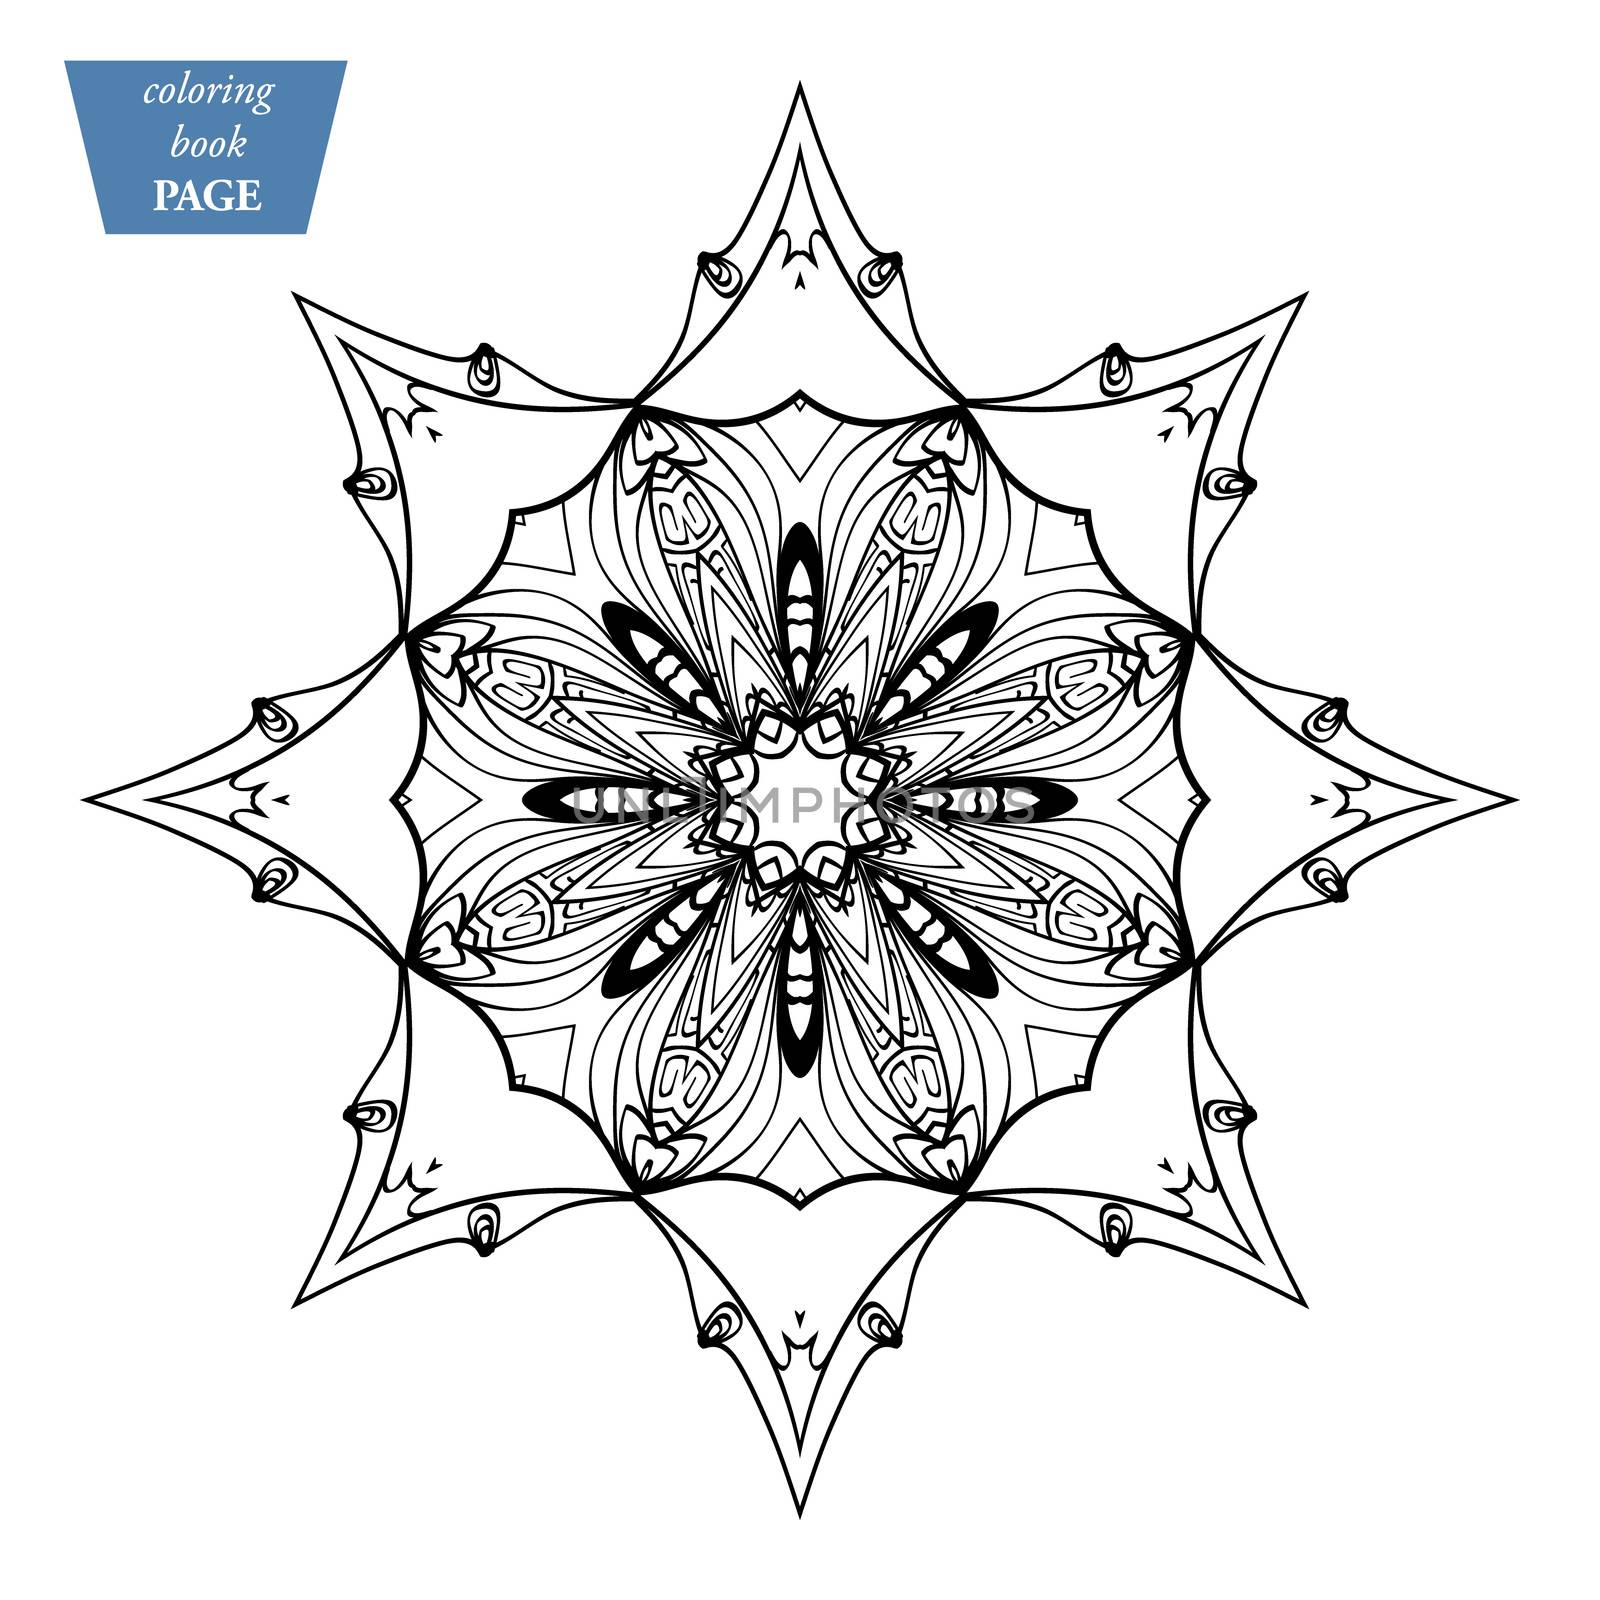 Mandala. Coloring page. Vintage decorative elements. Oriental pattern, vector illustration.d by VeekSegal